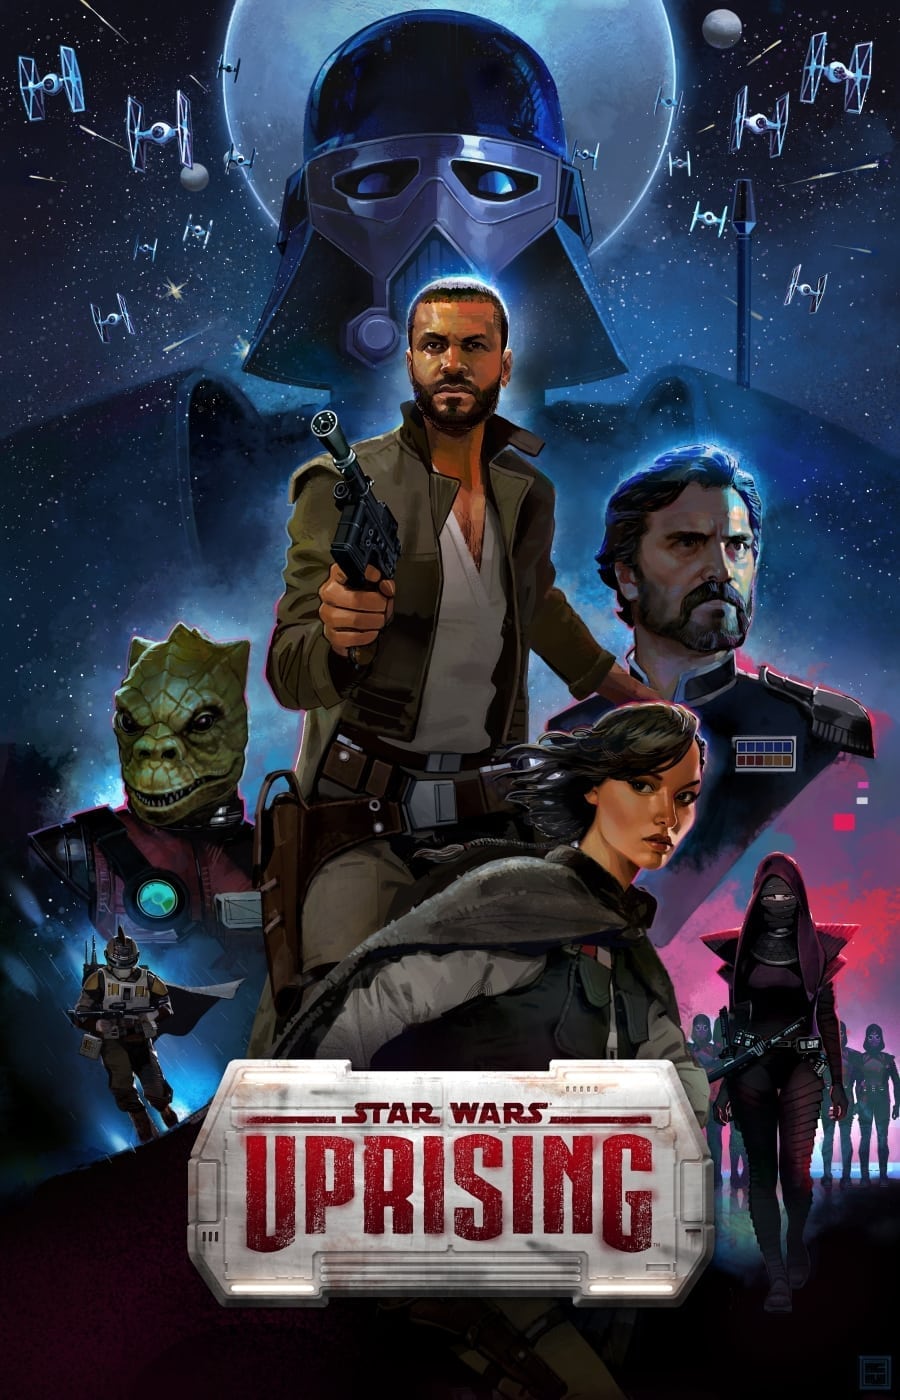 Star Wars Uprising poster